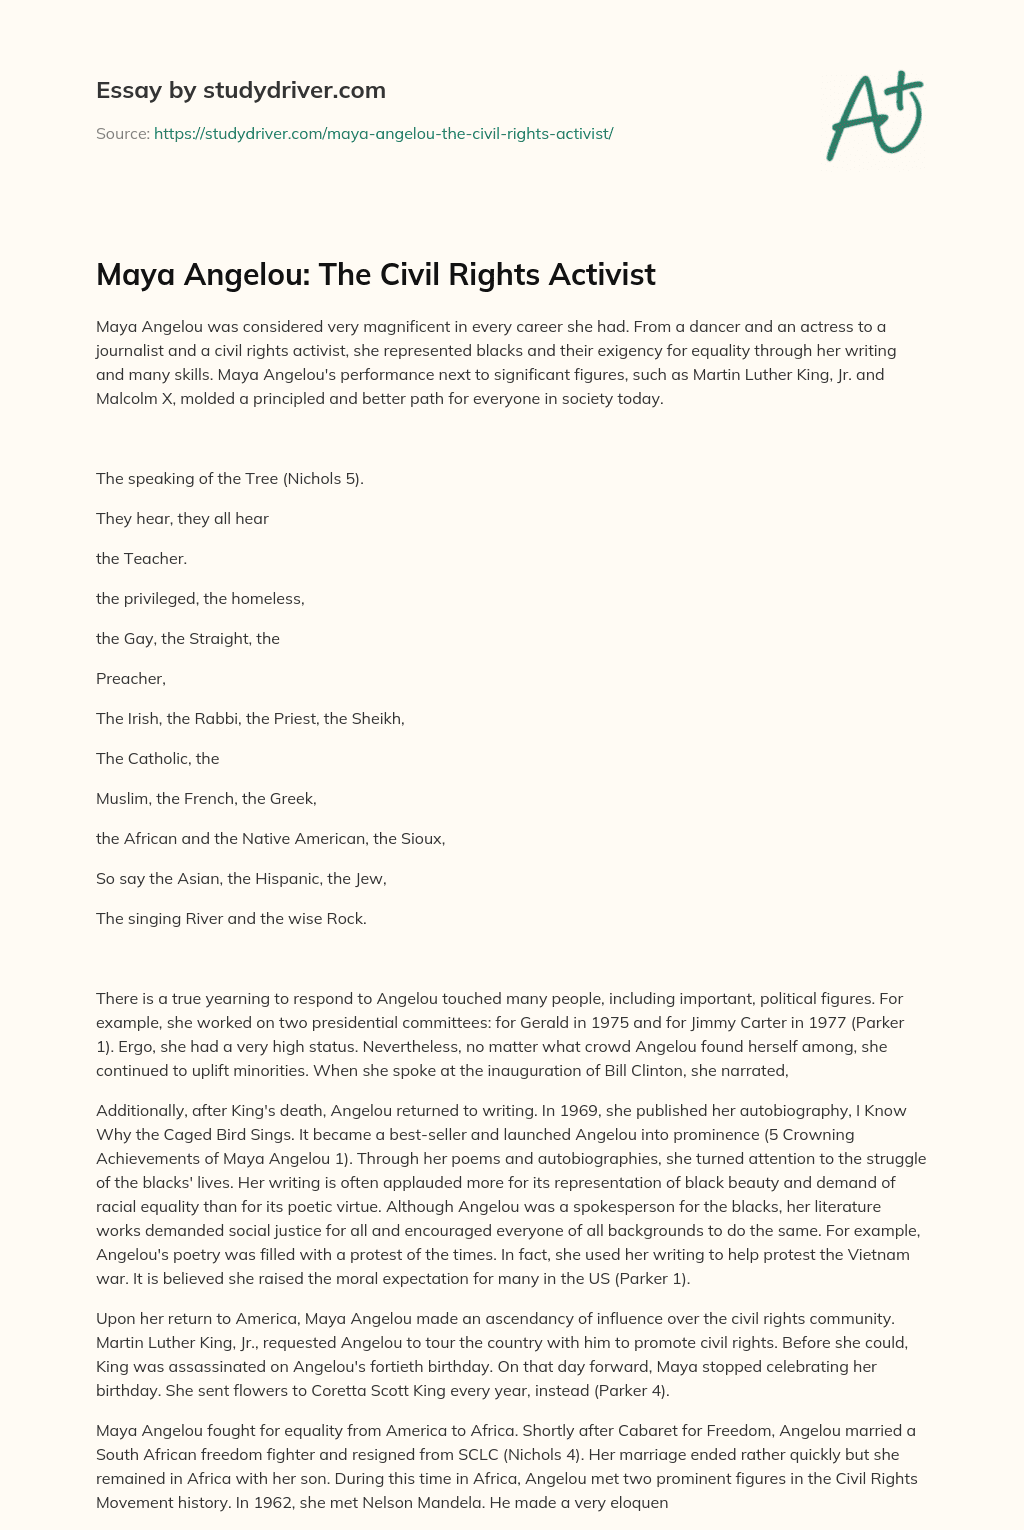 Maya Angelou: the Civil Rights Activist essay